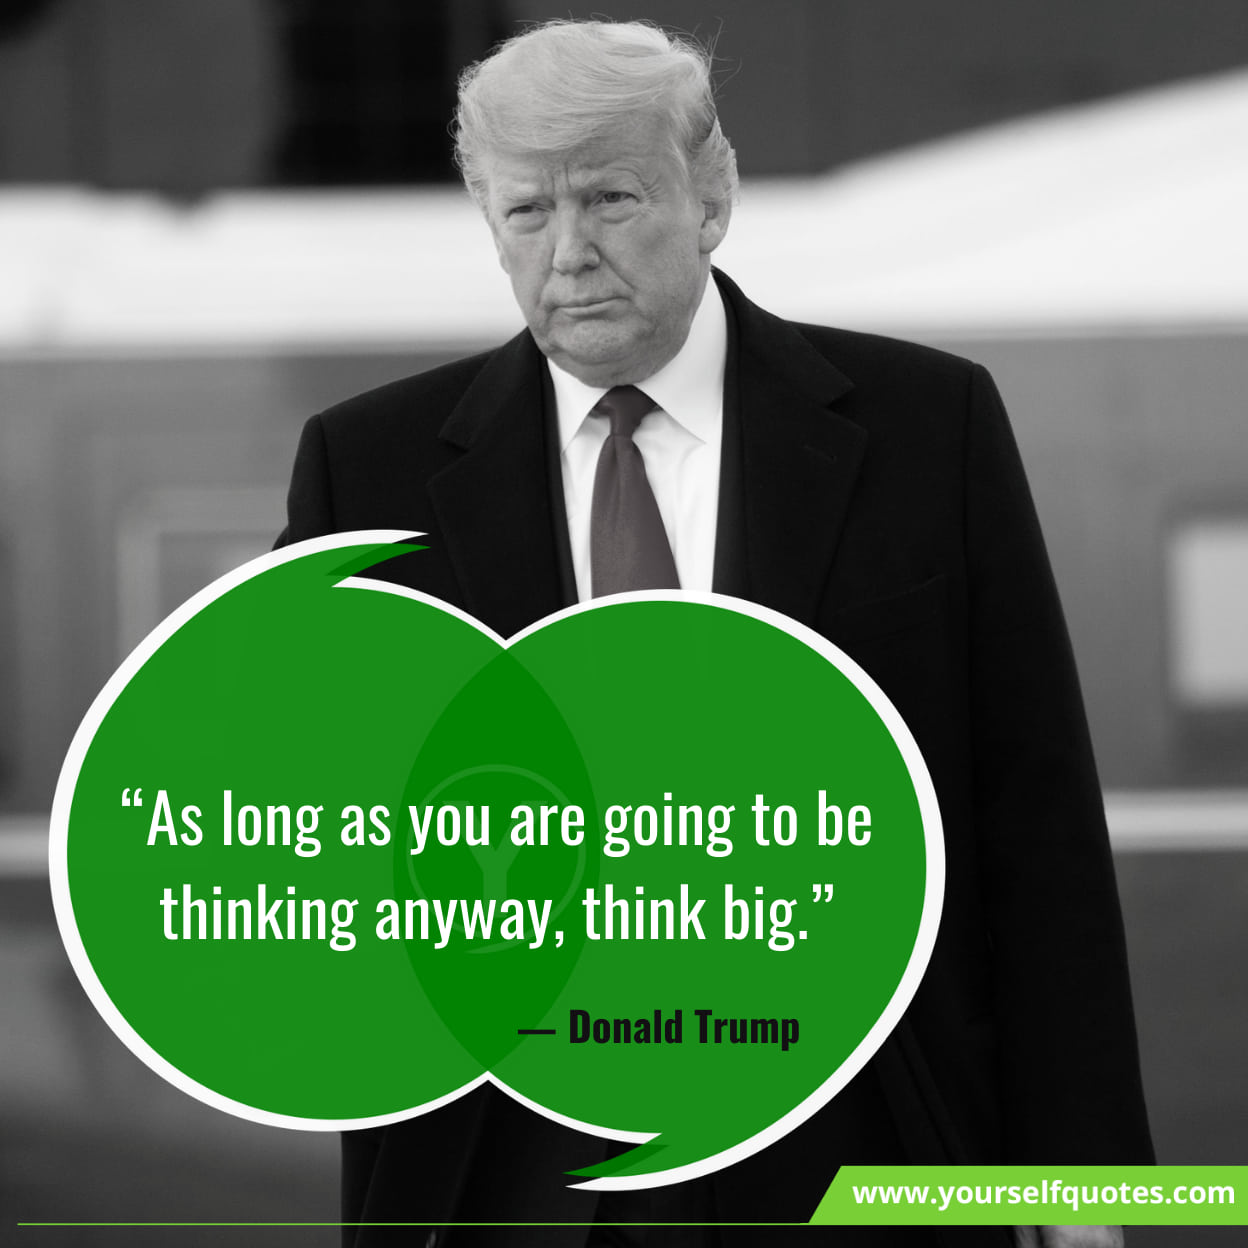 Donald Trump Famous Quotes